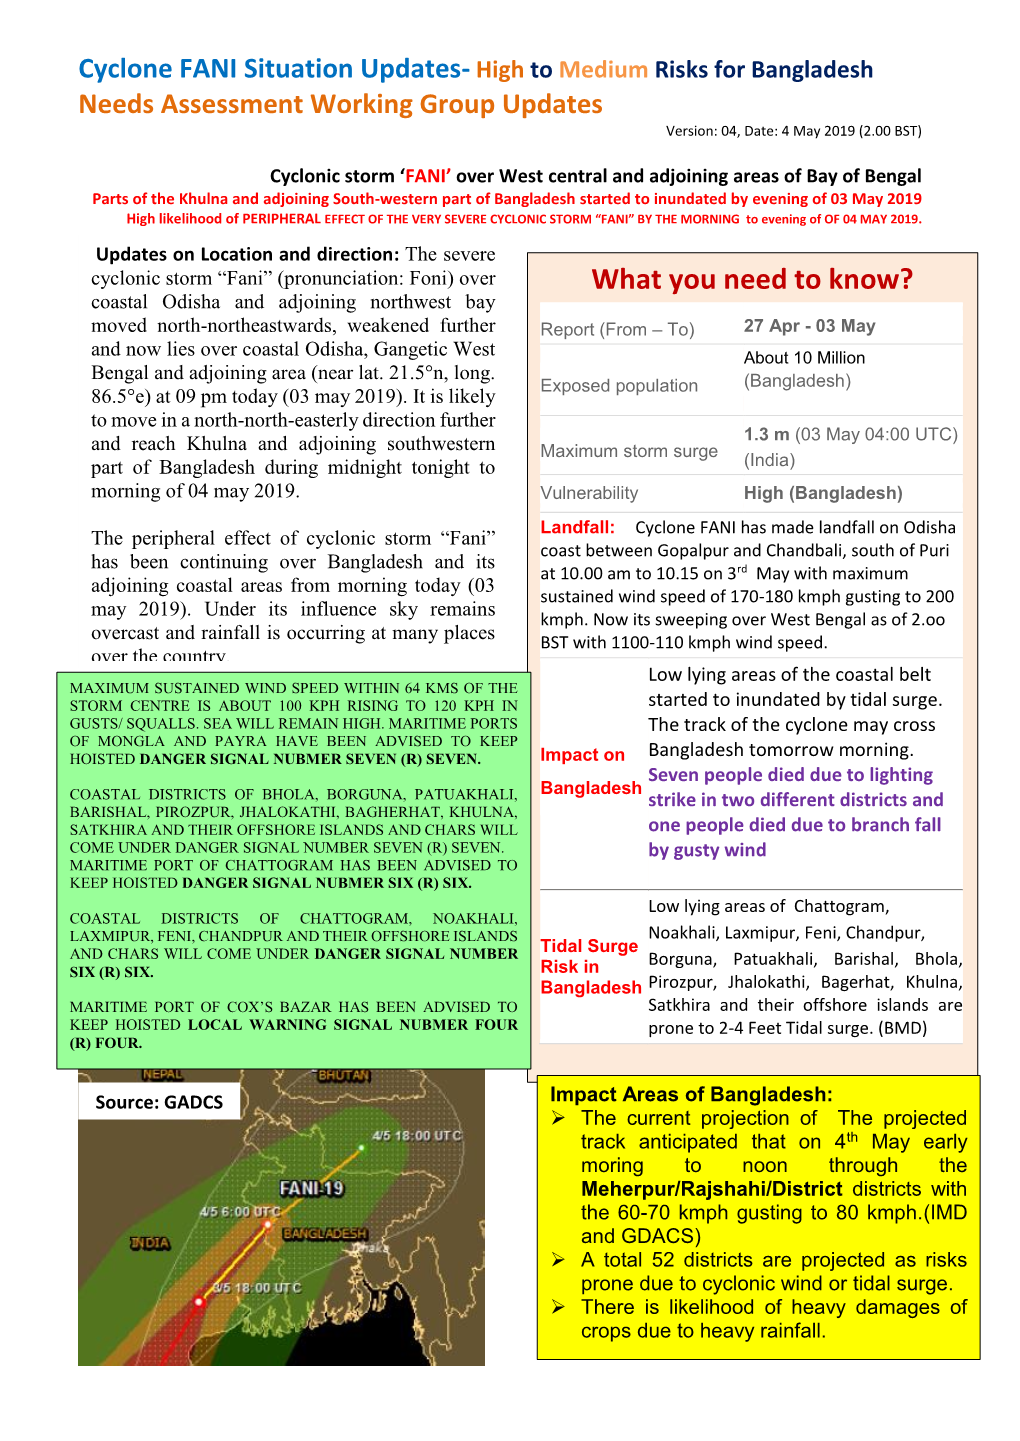 Cyclone-FANI-Situation-Report 04 NAWG.Pdf (English)